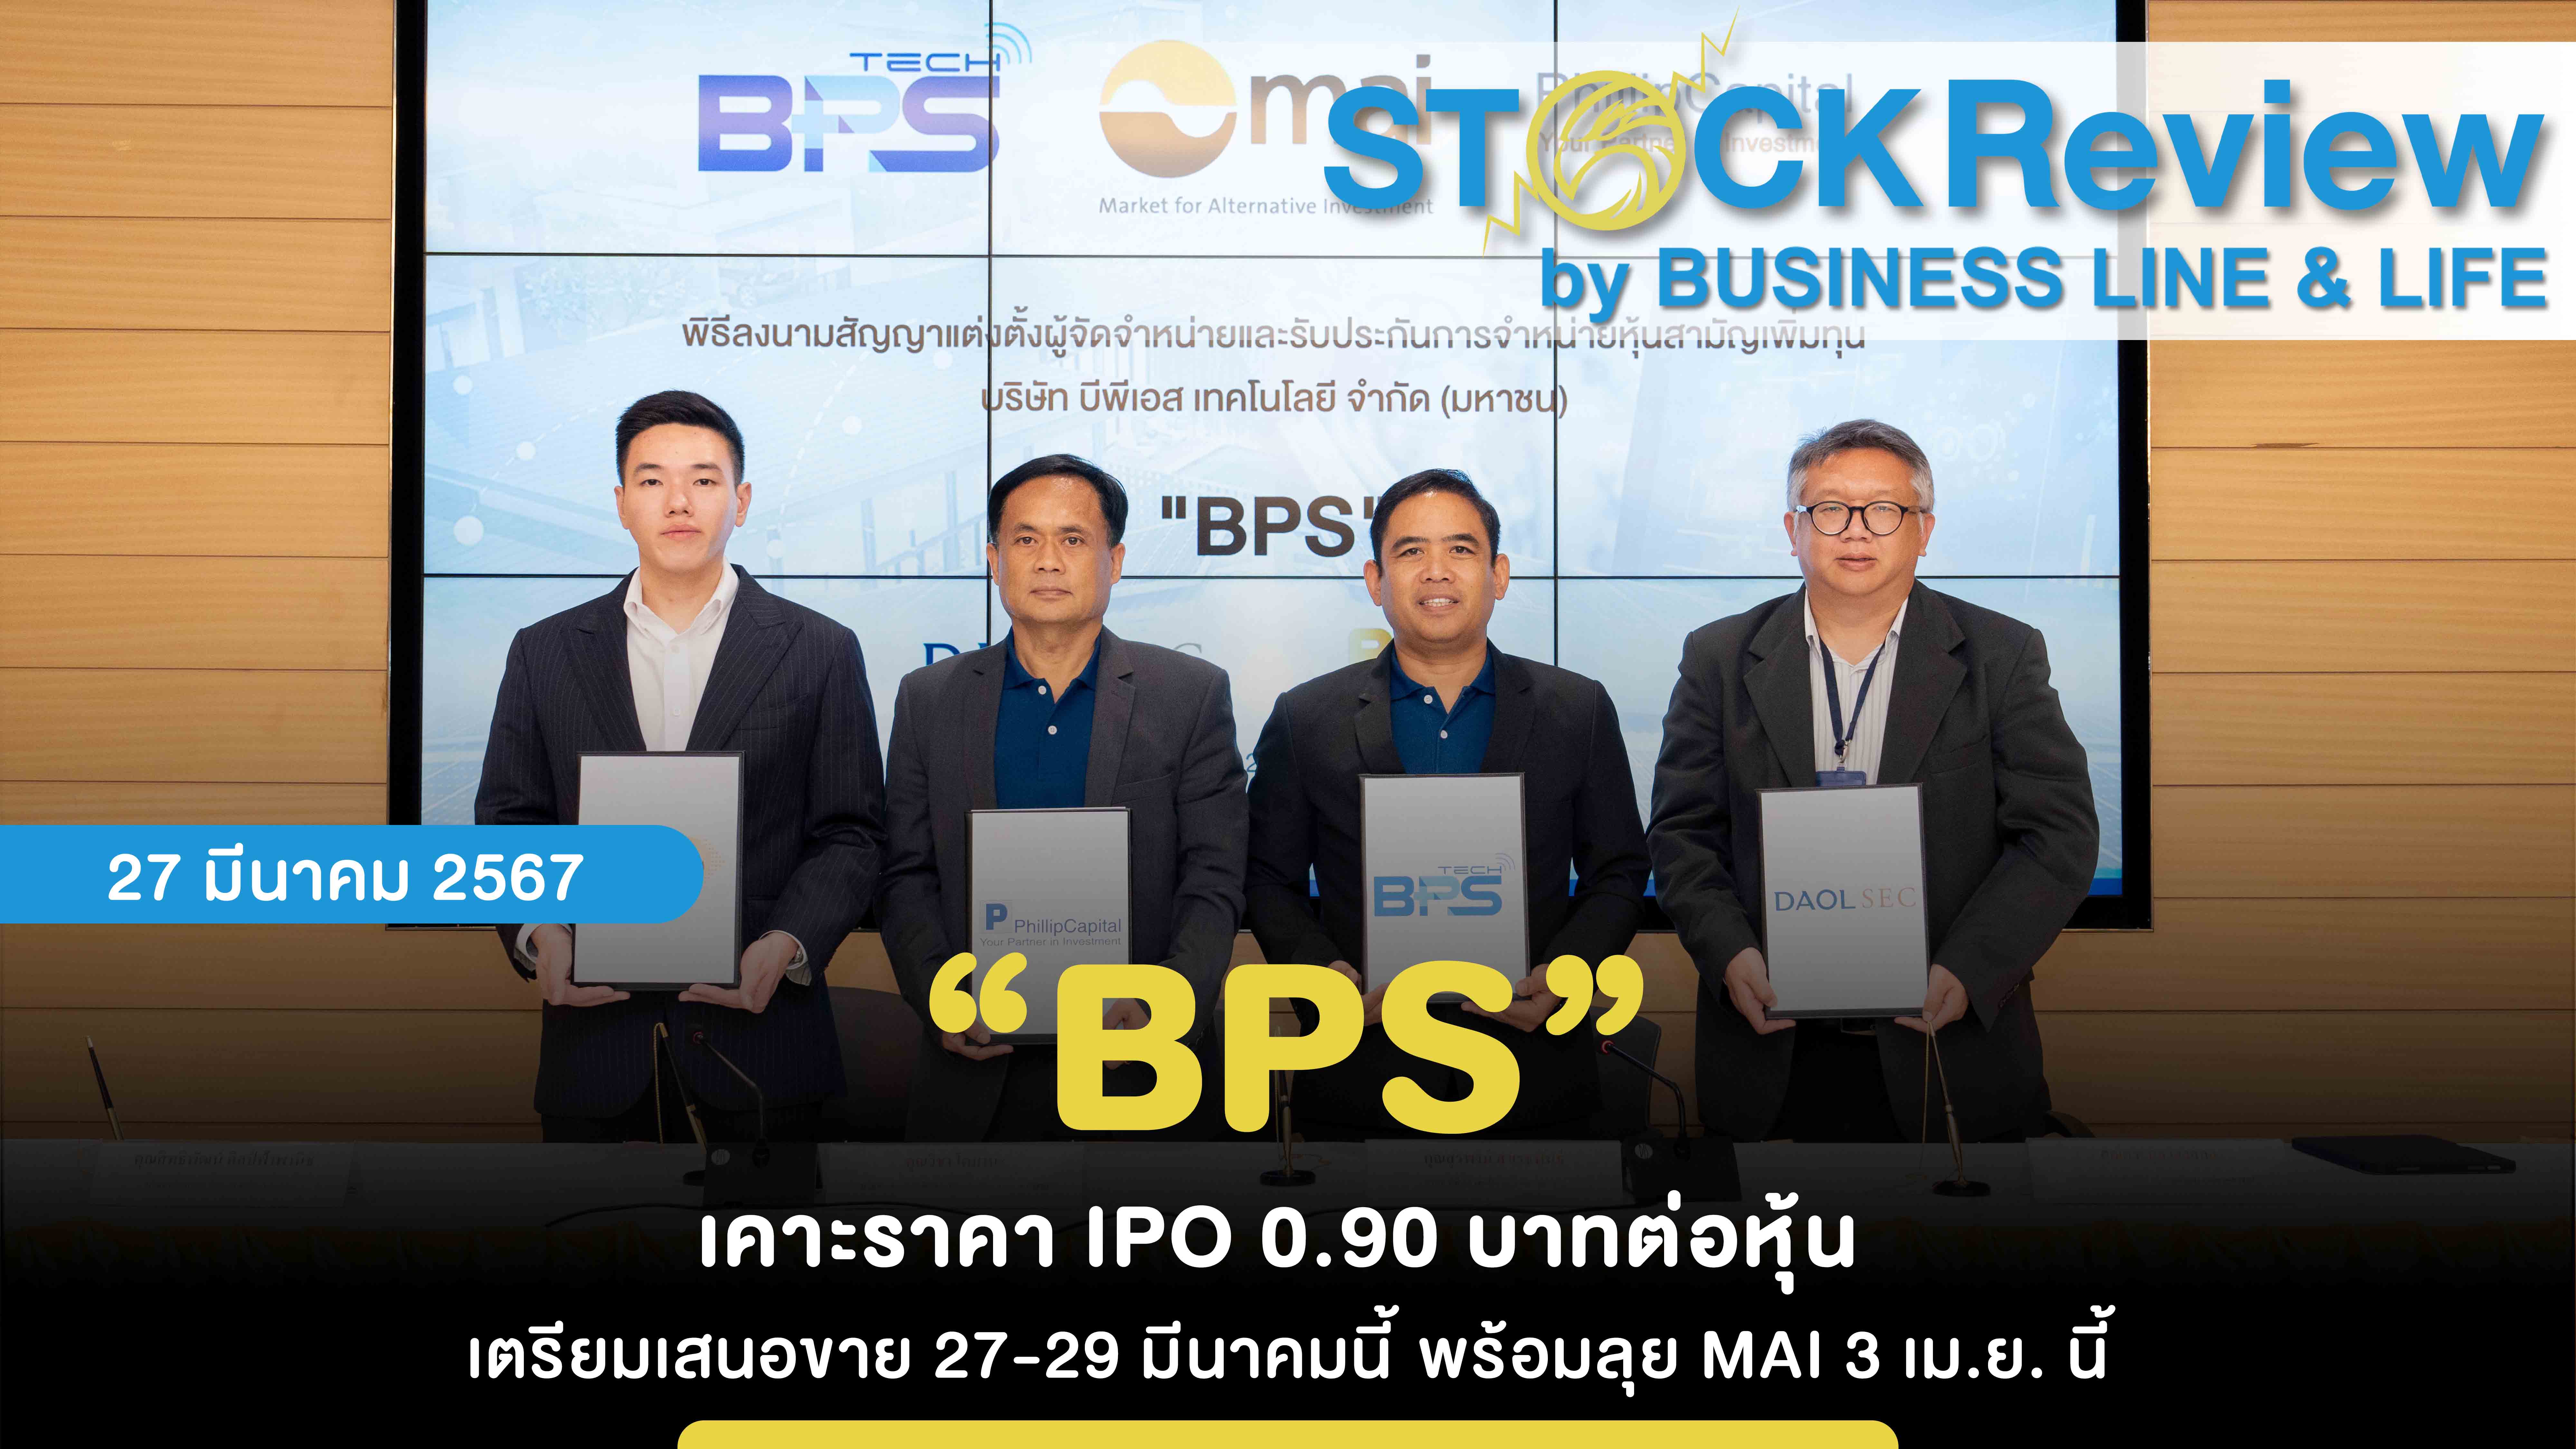 “BPS” เคาะราคา IPO 0.90 บาทต่อหุ้น  เตรียมเสนอขาย 27-29 มีนาคมนี้ พร้อมลุย MAI 3 เม.ย. นี้